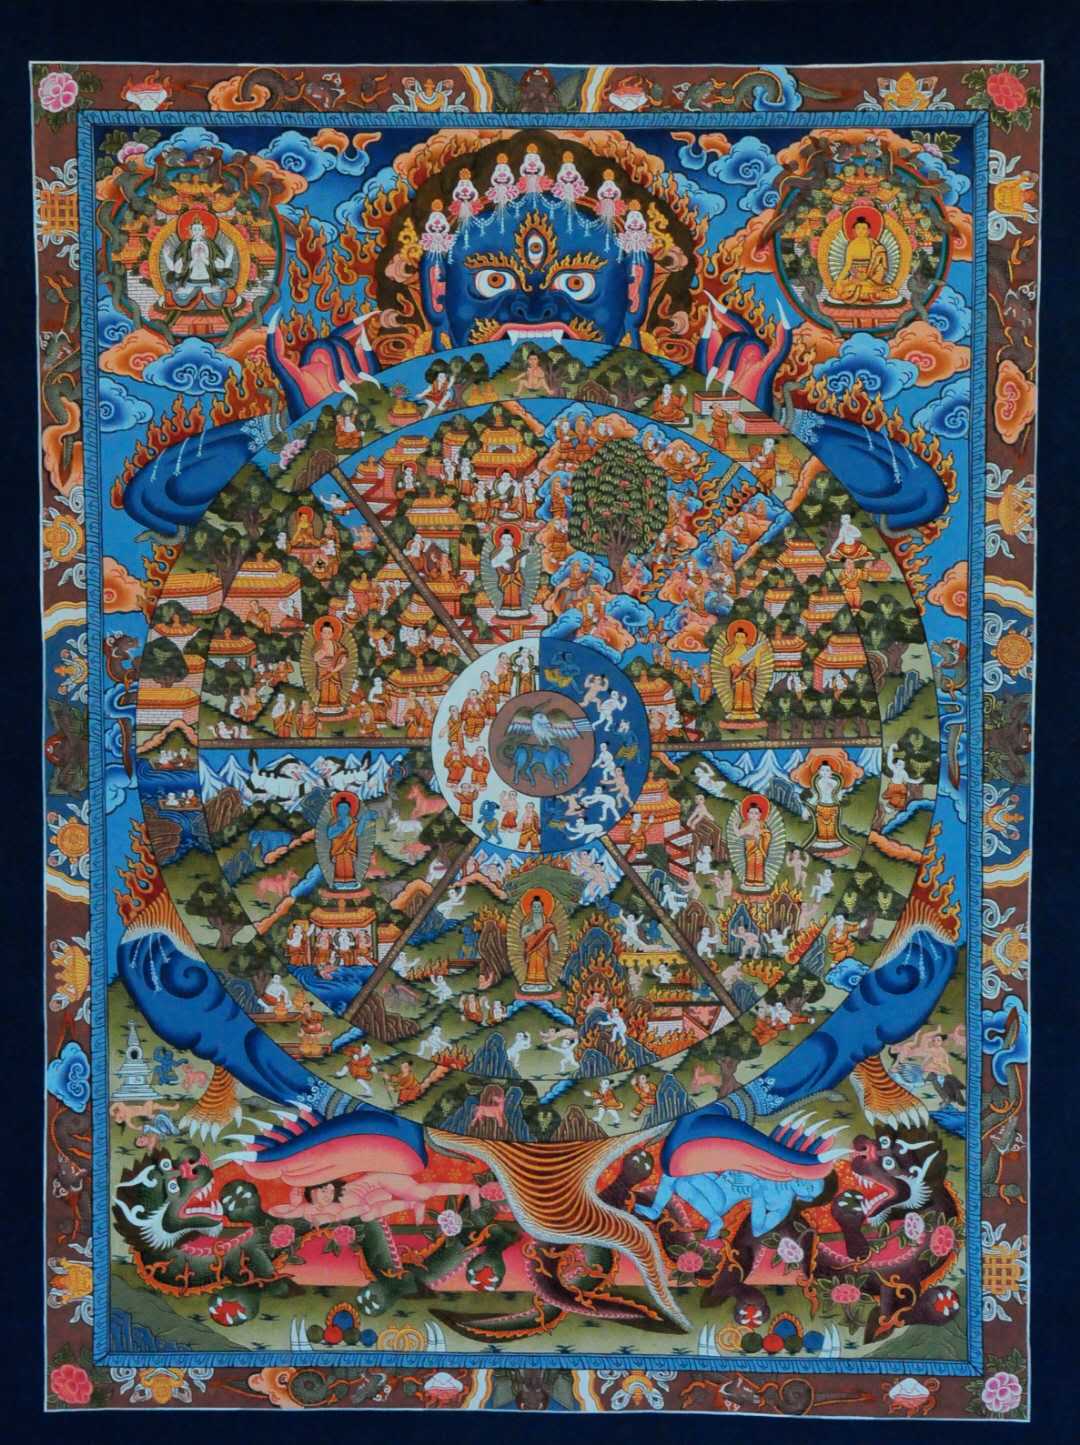 create your own tibetan wheel of life